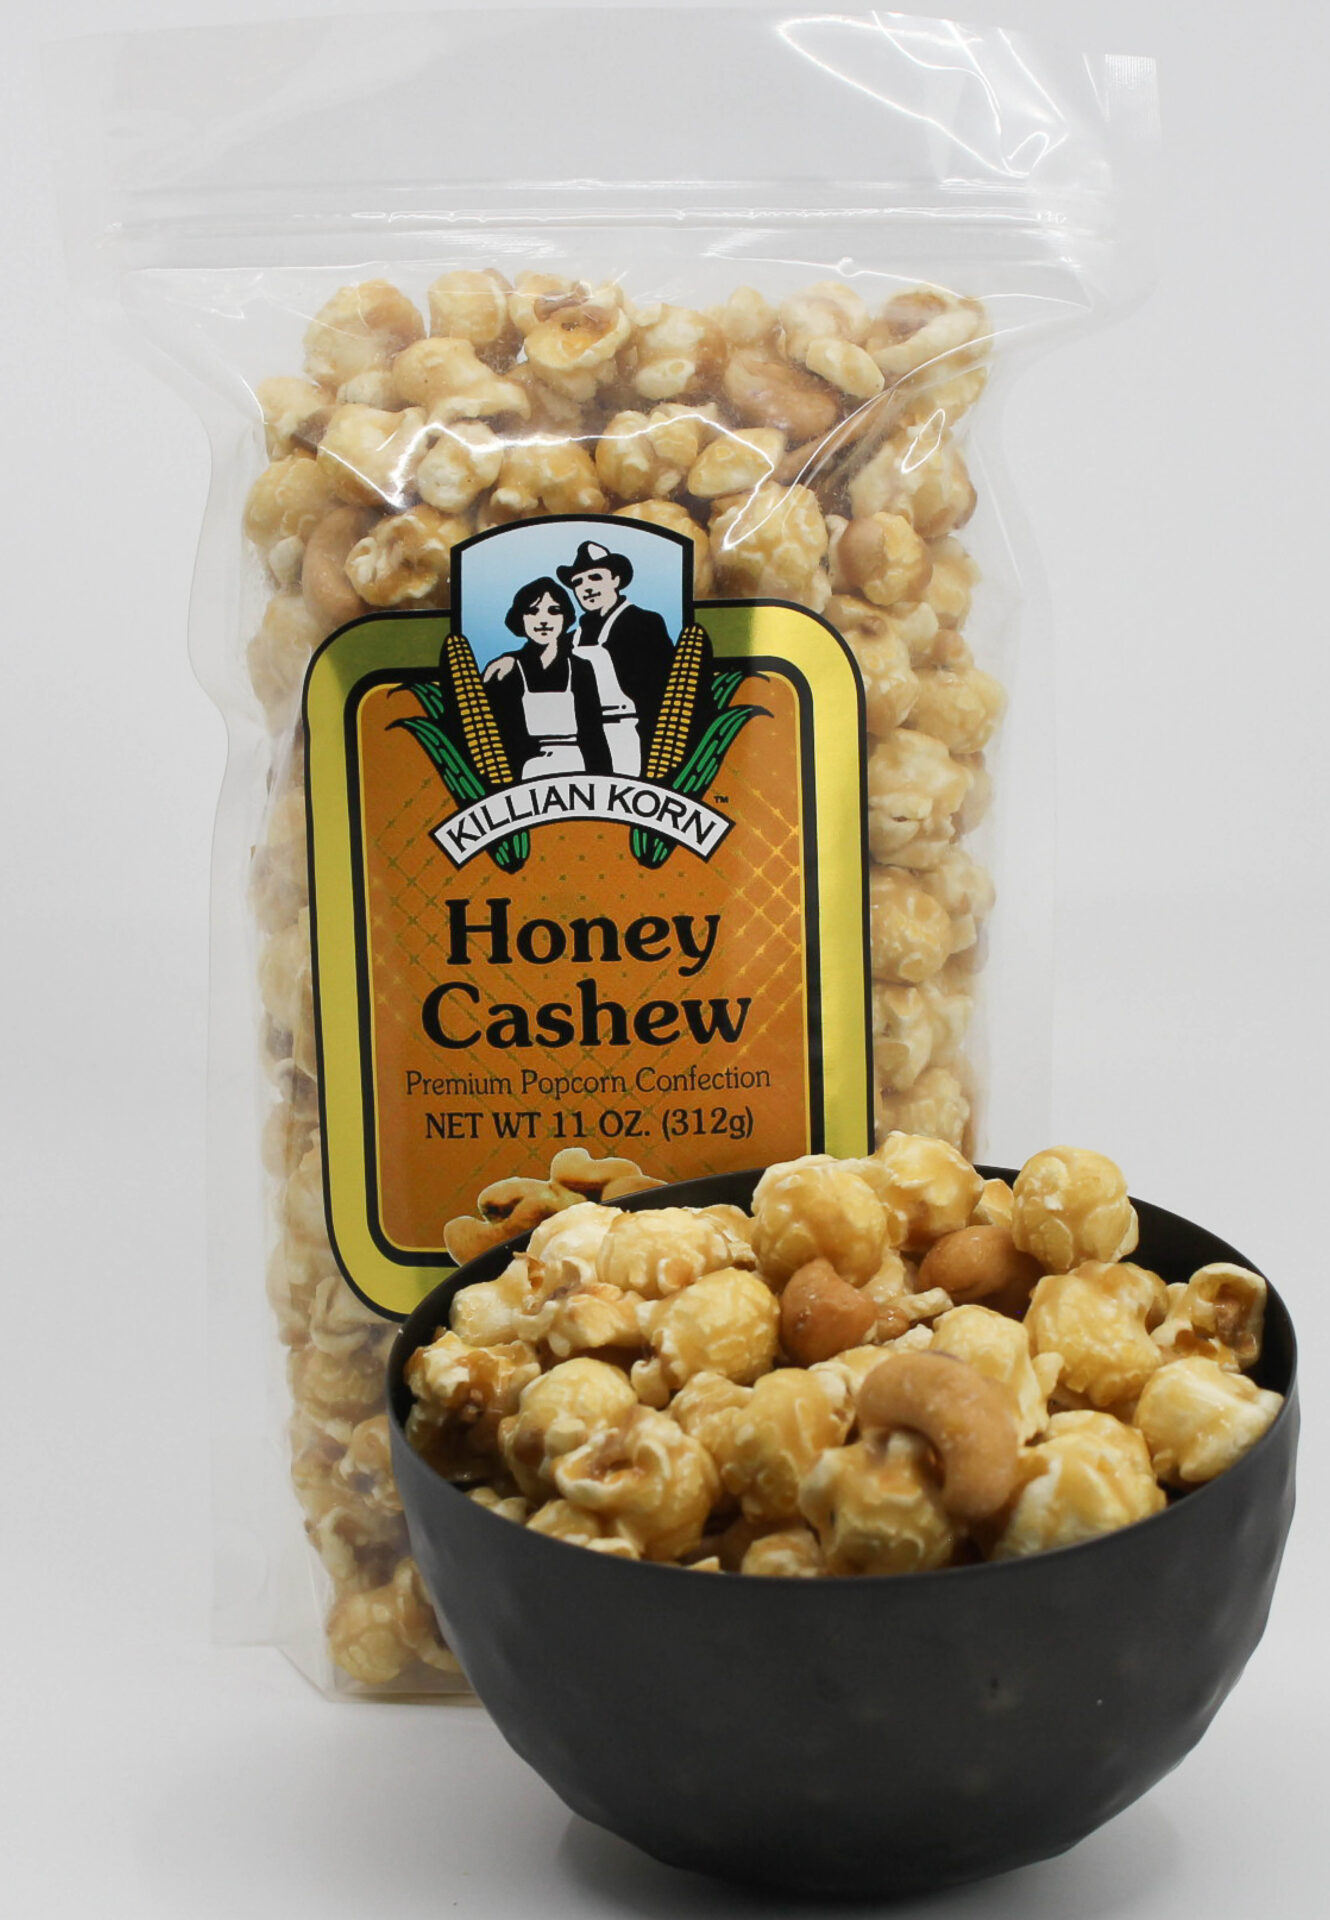 Honey Cashew popcorn